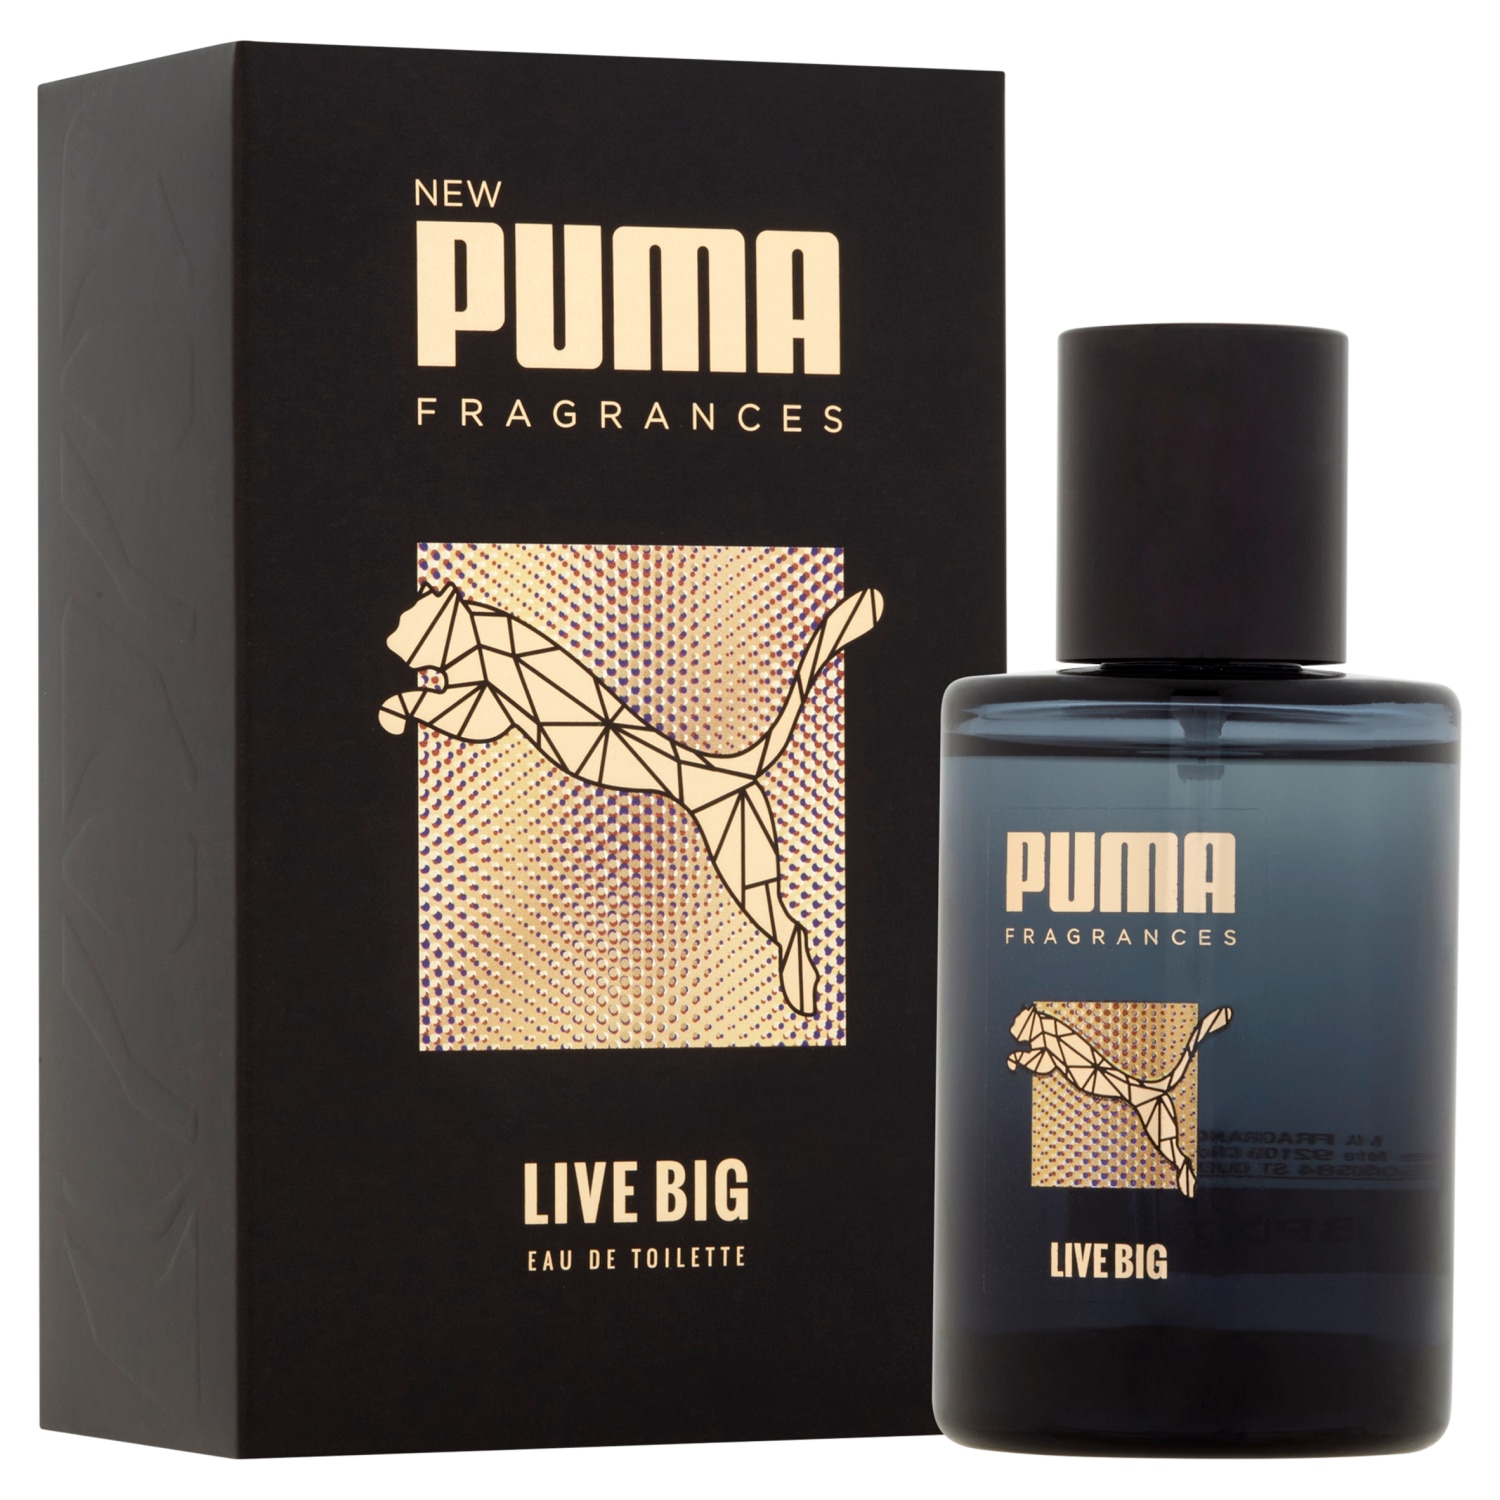 Биг лив. Духи Puma Live big. Аромат Пума для мужчин. Пума Блэк духи мужские. Puma туалетная вода мужская.